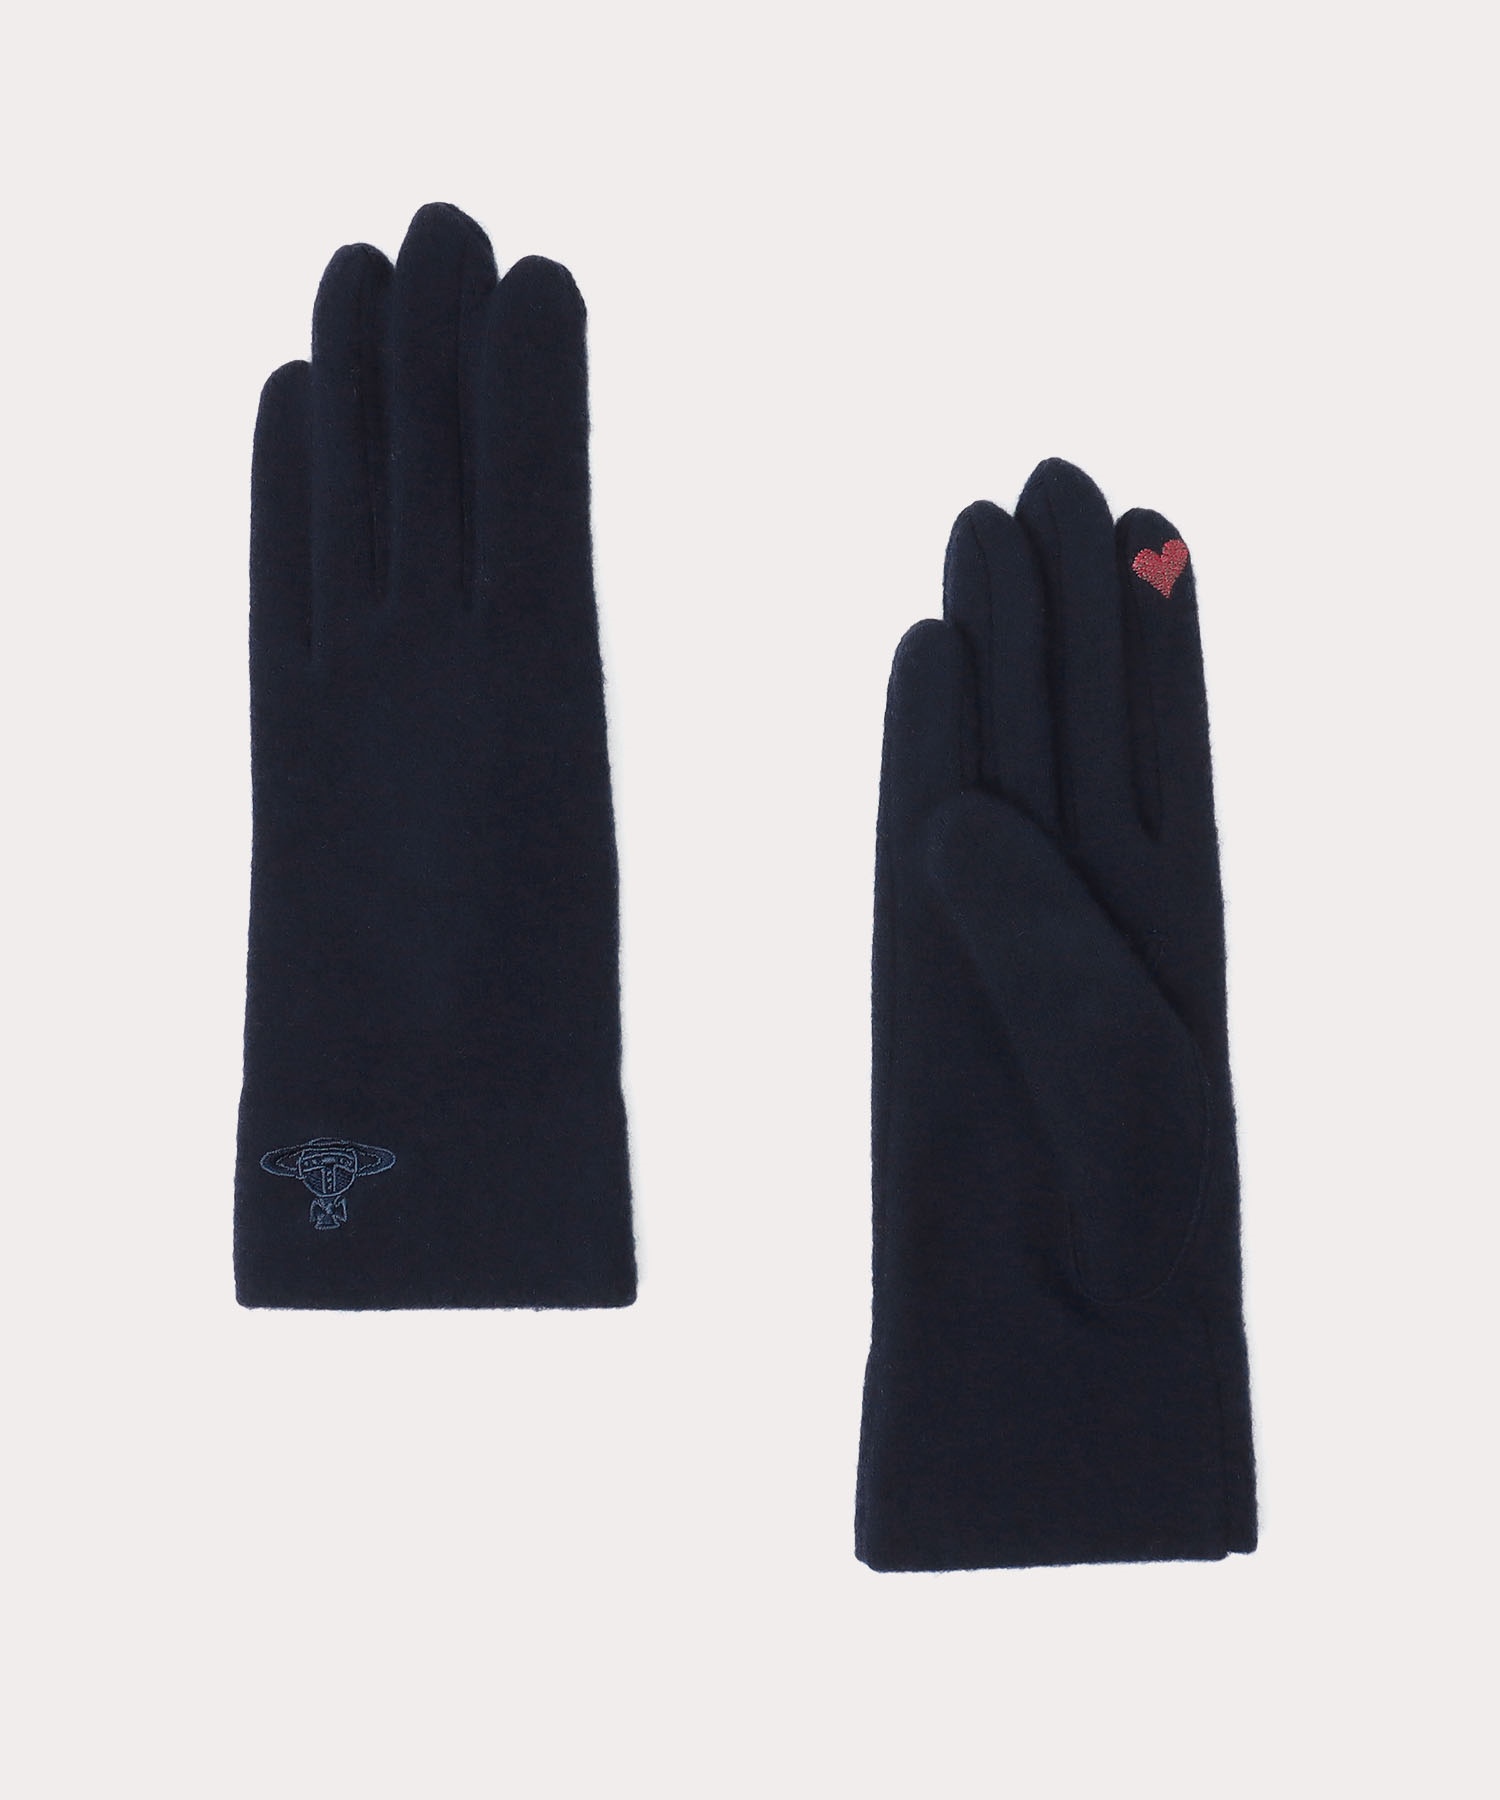 Vivienne Westwoodヴィヴィアンウエストウッド 手袋 完売品全長22